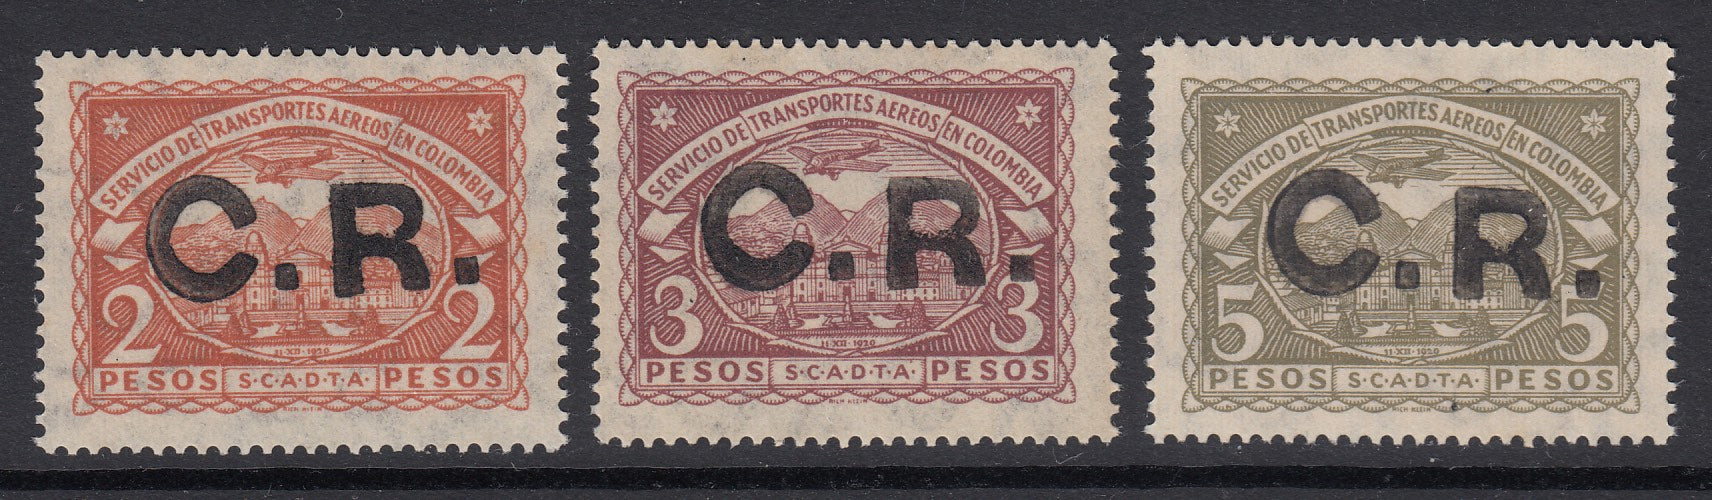 Colombia SCADTA 1923 Costa Rica Airmail Overprints Top Values MNH. Scott CLCR9-CLCR11